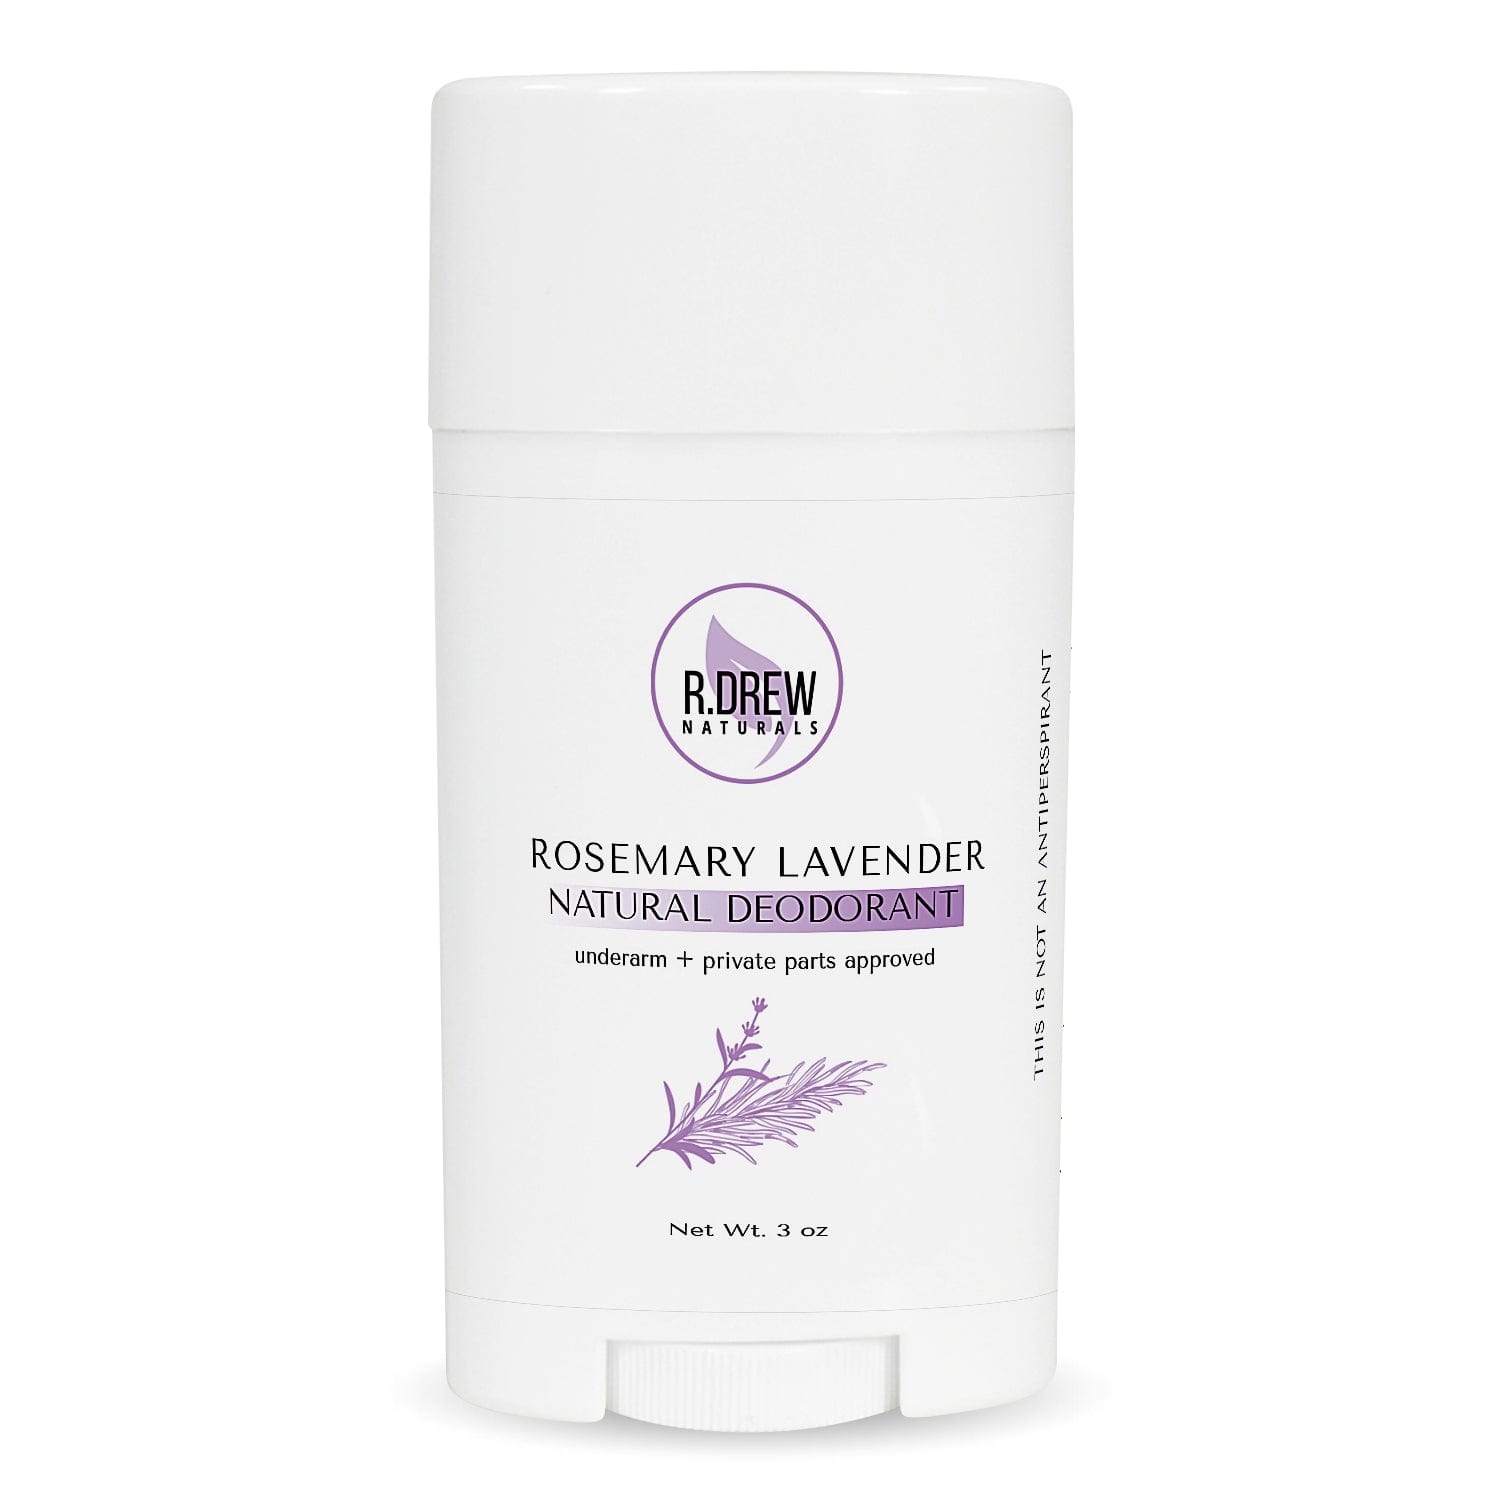 Rosemary Lavender Natural Deodorant - R. Drew Naturals